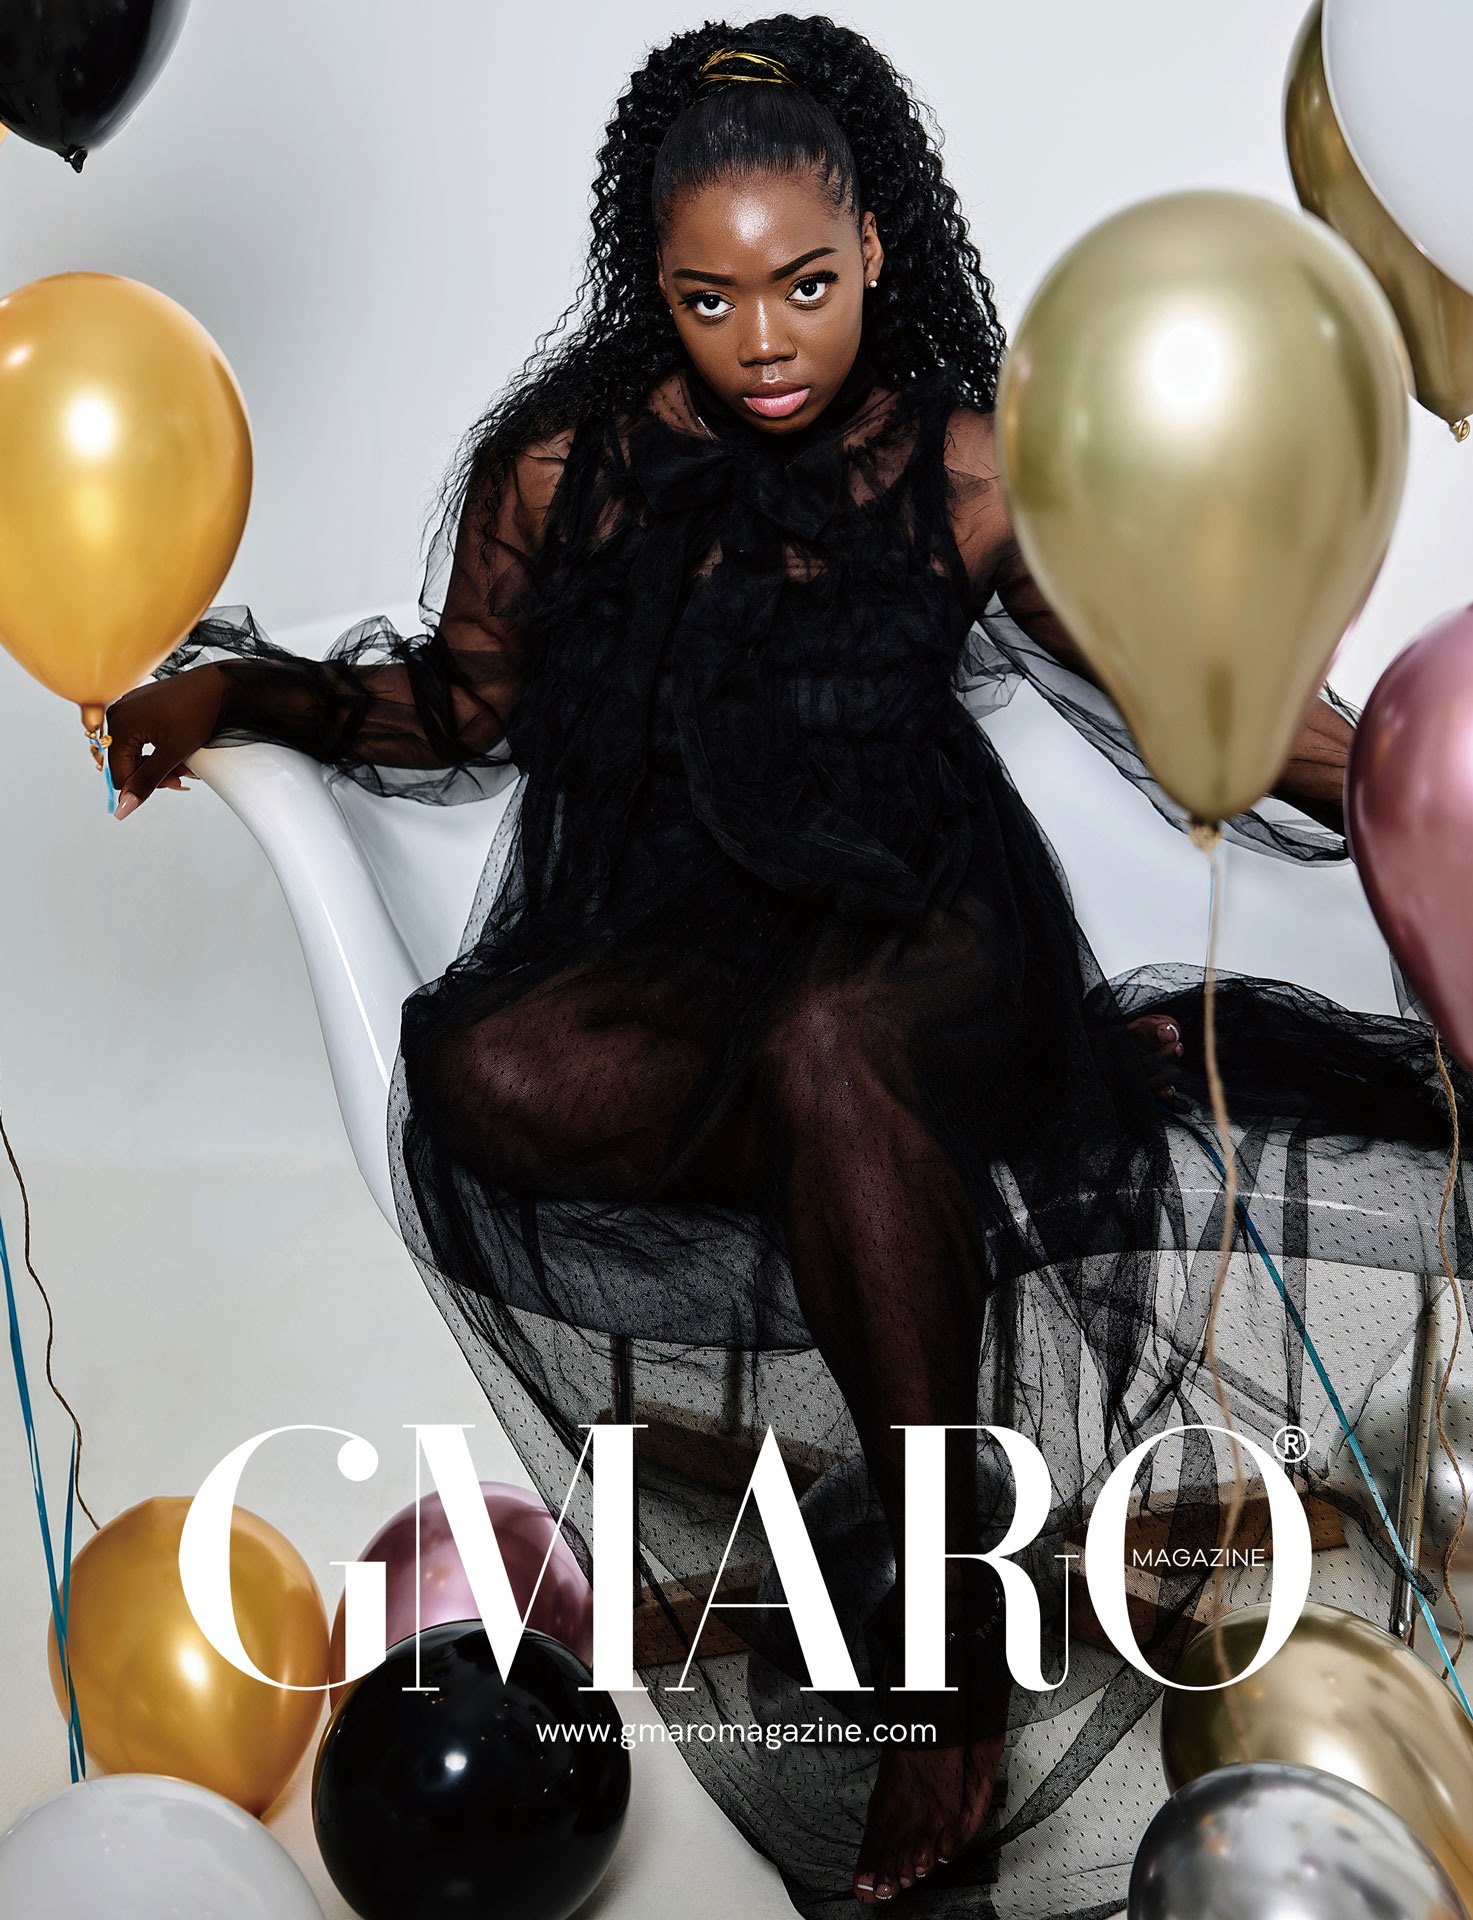 Gmaro Magazine Queen of Shine